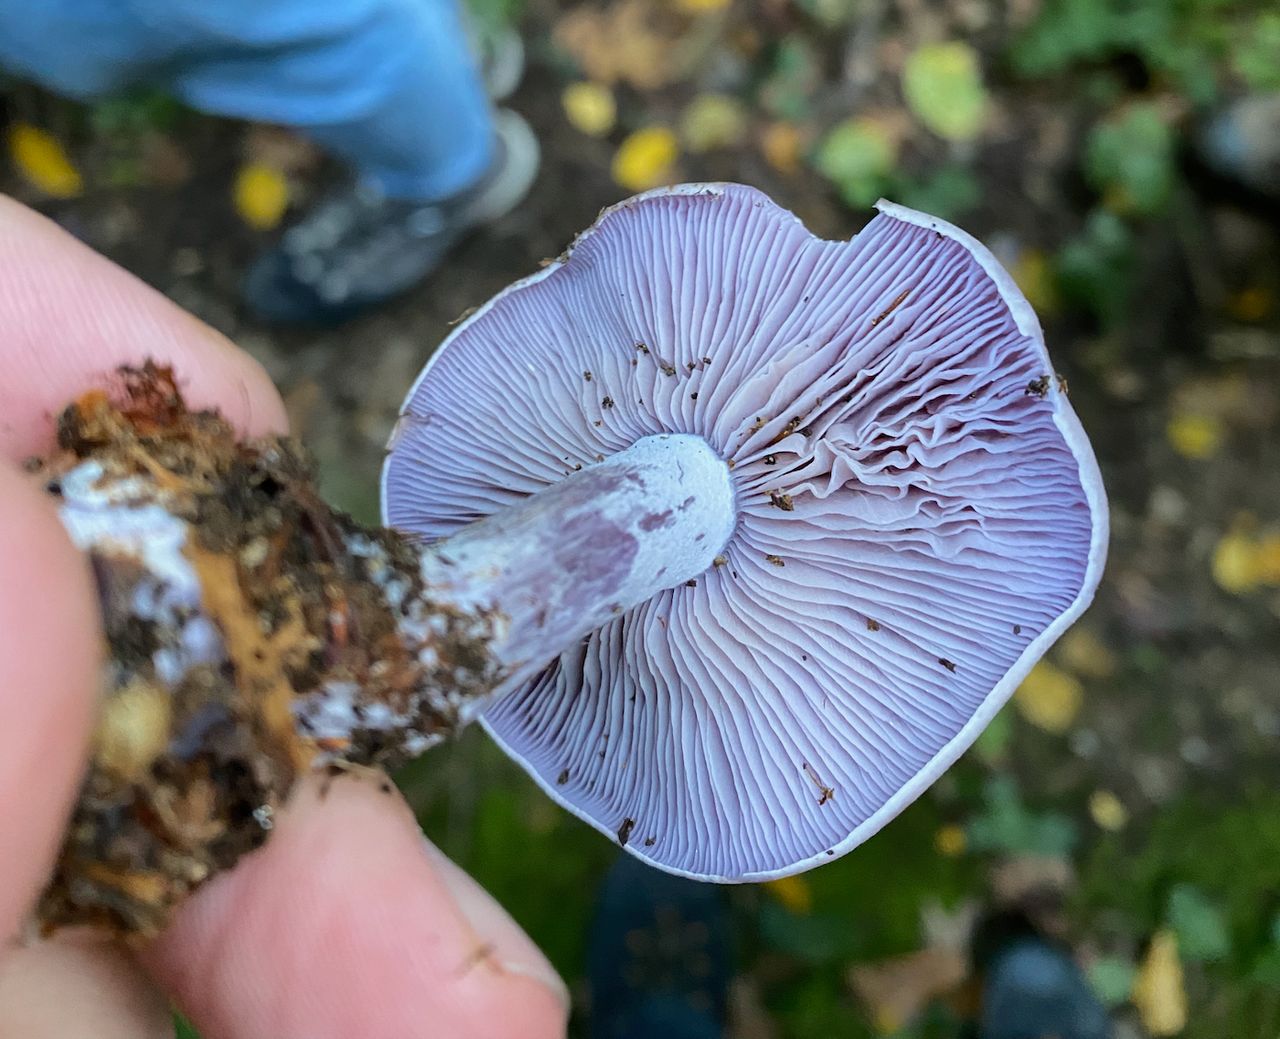 The gills of a light-violet mushroom being held upside down.